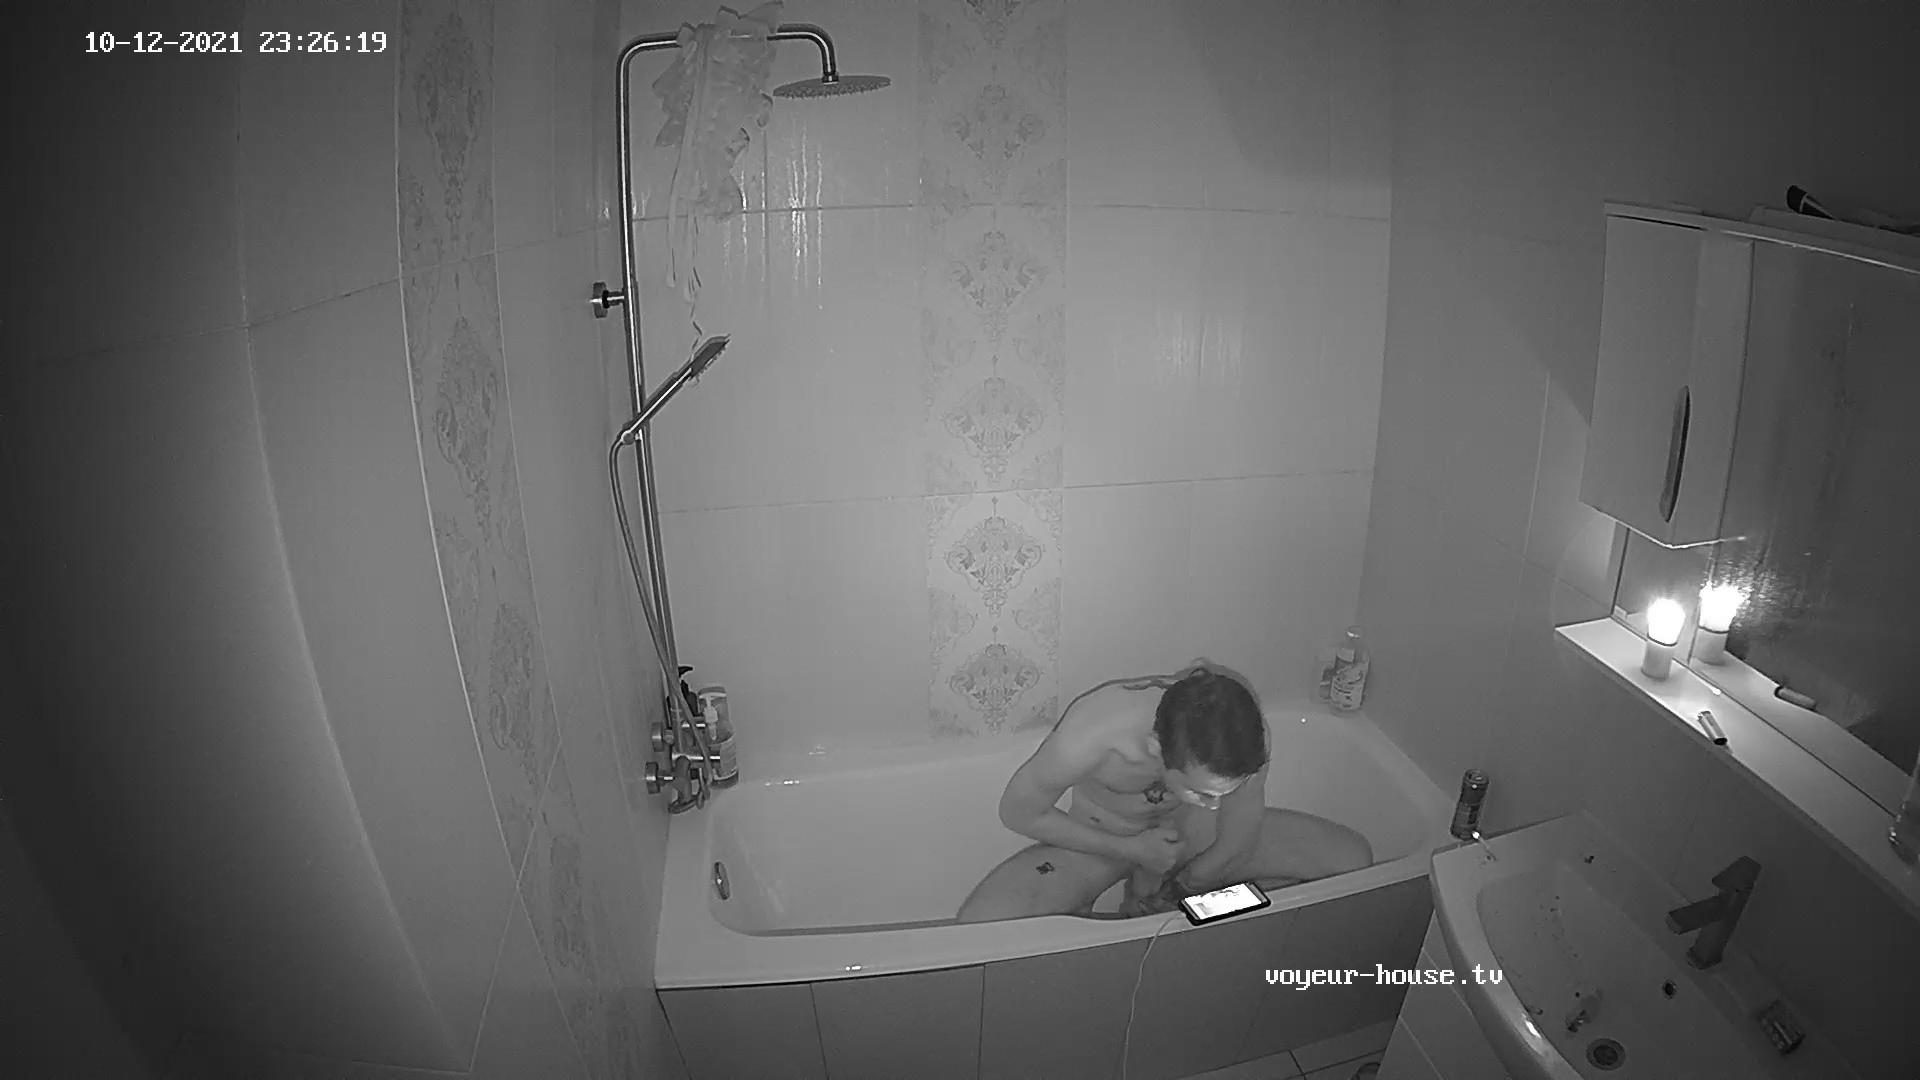 Artem jerking off in the bath 12 Oct 2021